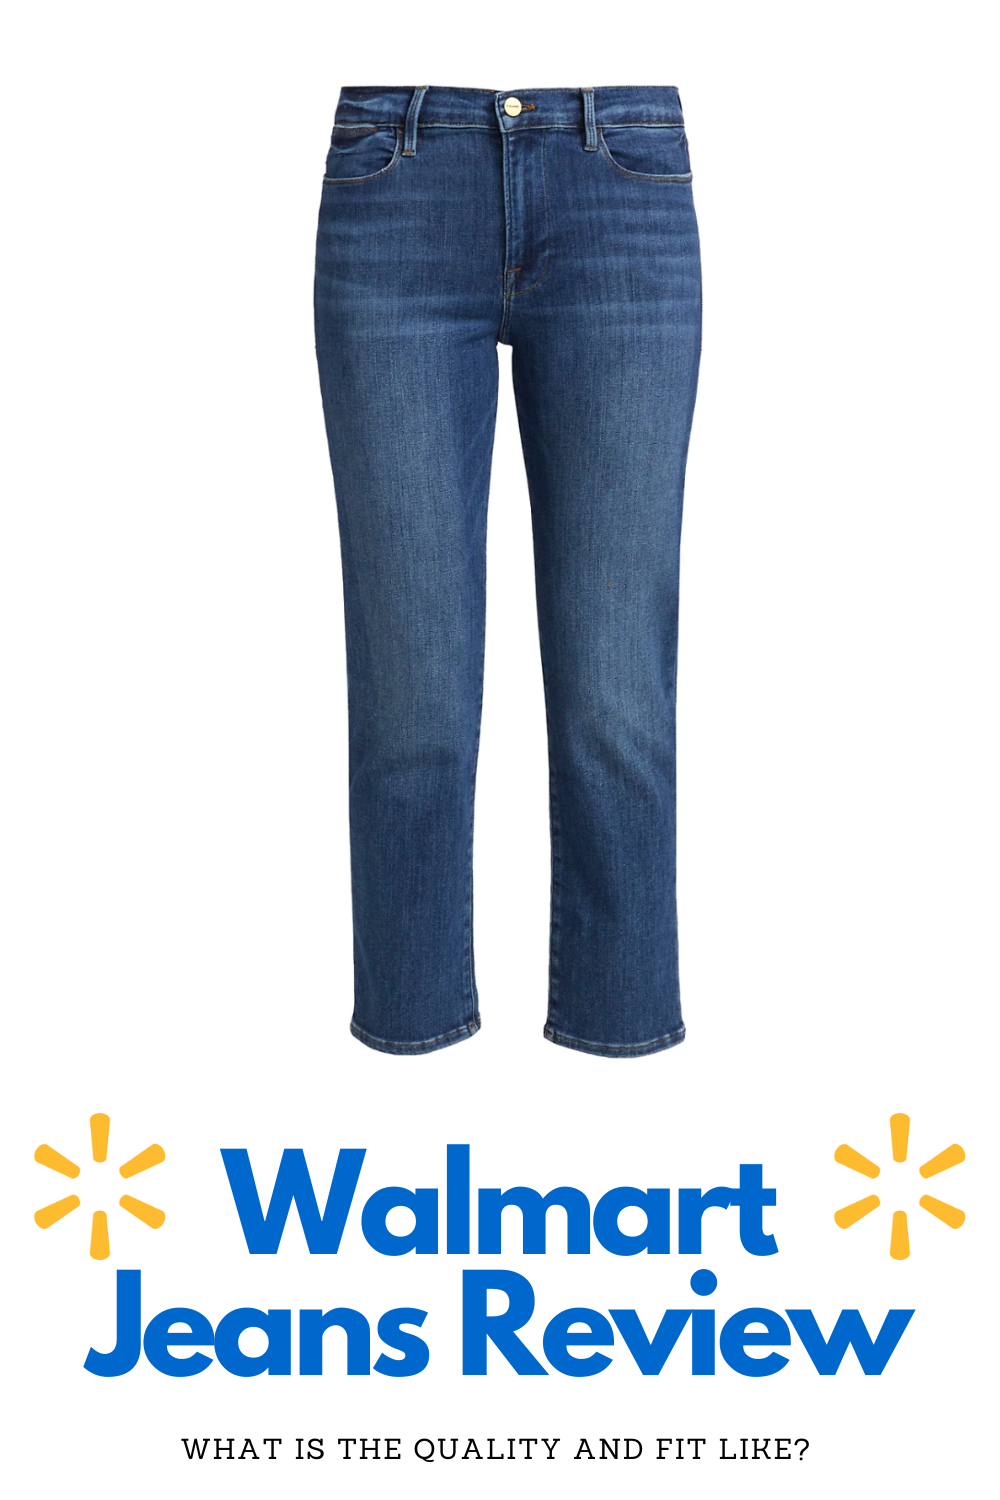 Walmart Jeans Review